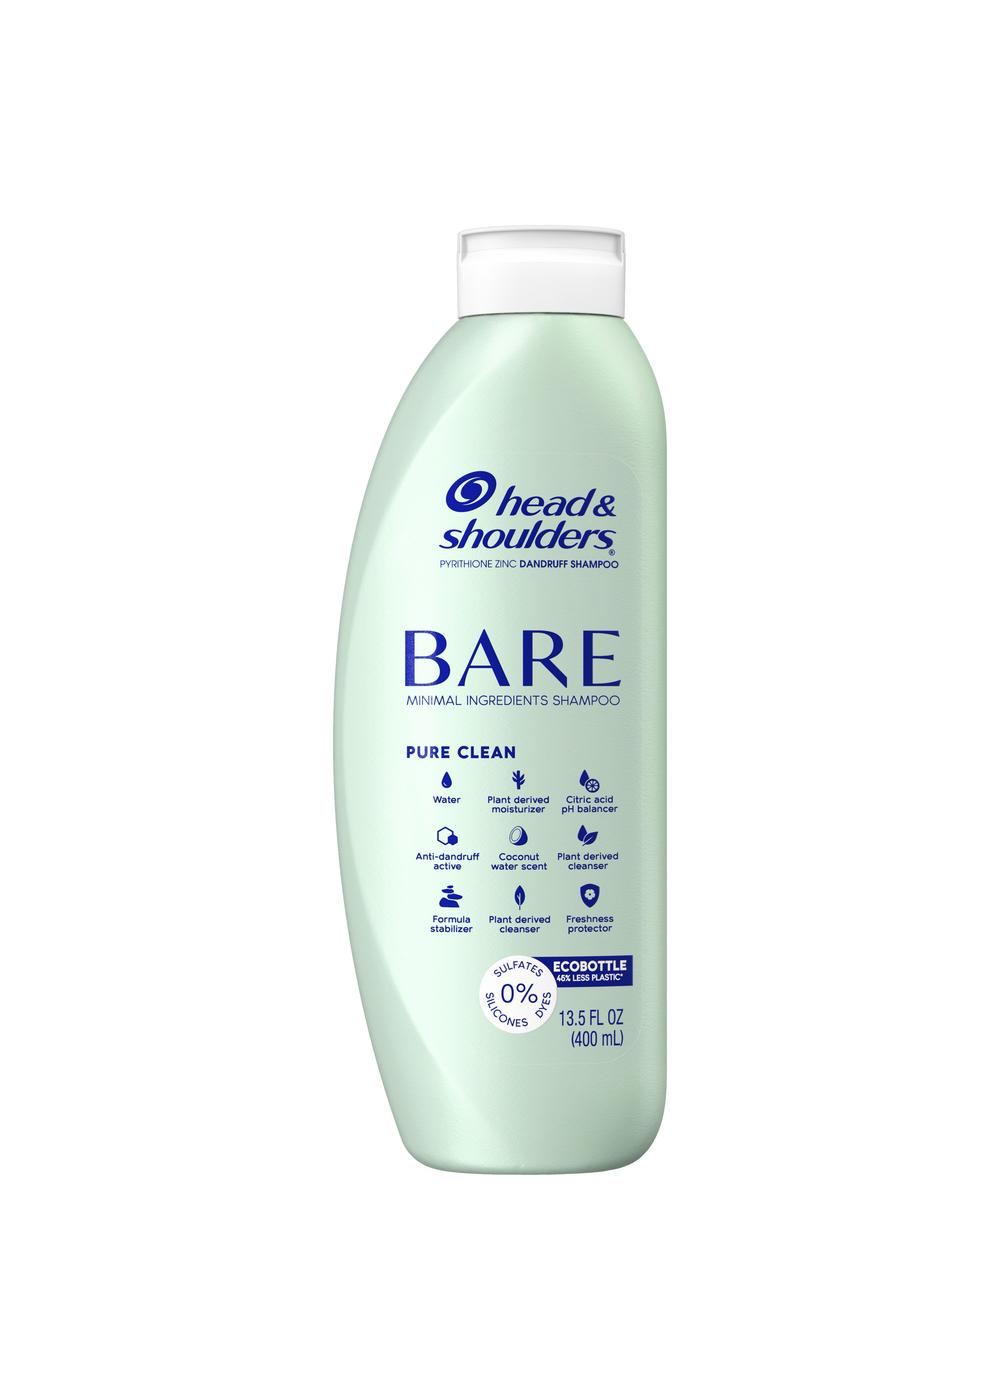 Head & Shoulders Bare Pure Clean Shampoo ; image 1 of 2